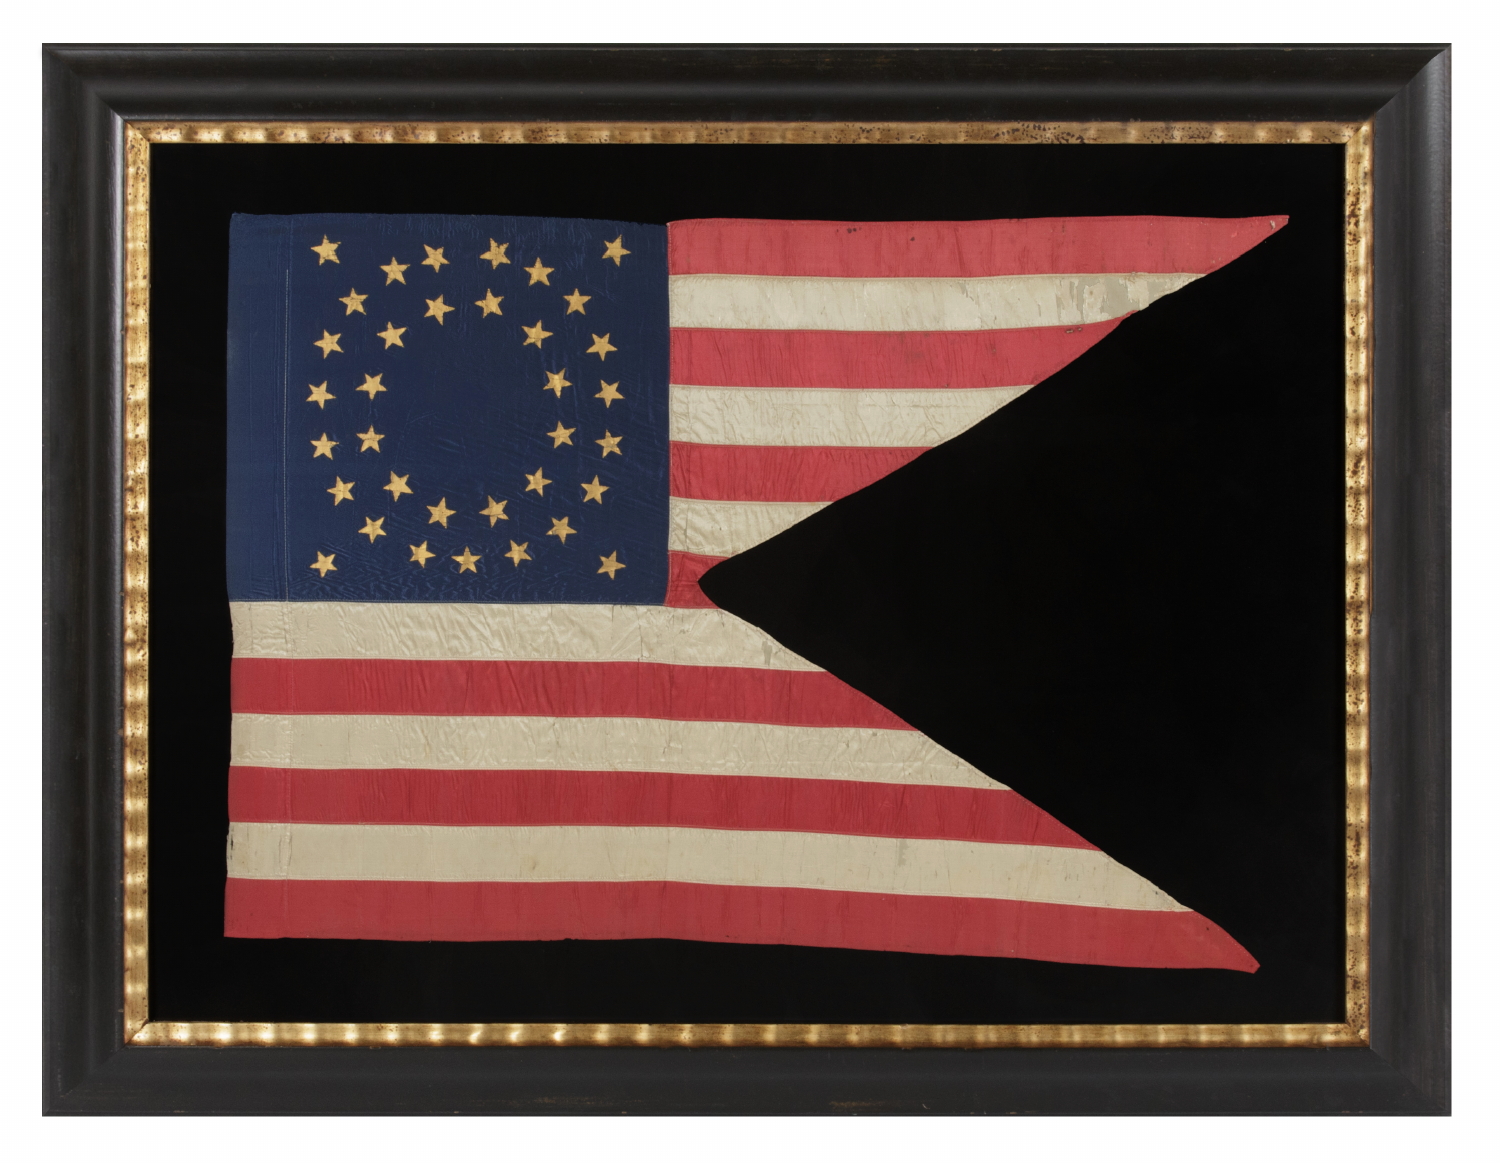 United States Guidon.. 35 Star Flag CORRECT SIZE Civil War Flag Indian Wars 